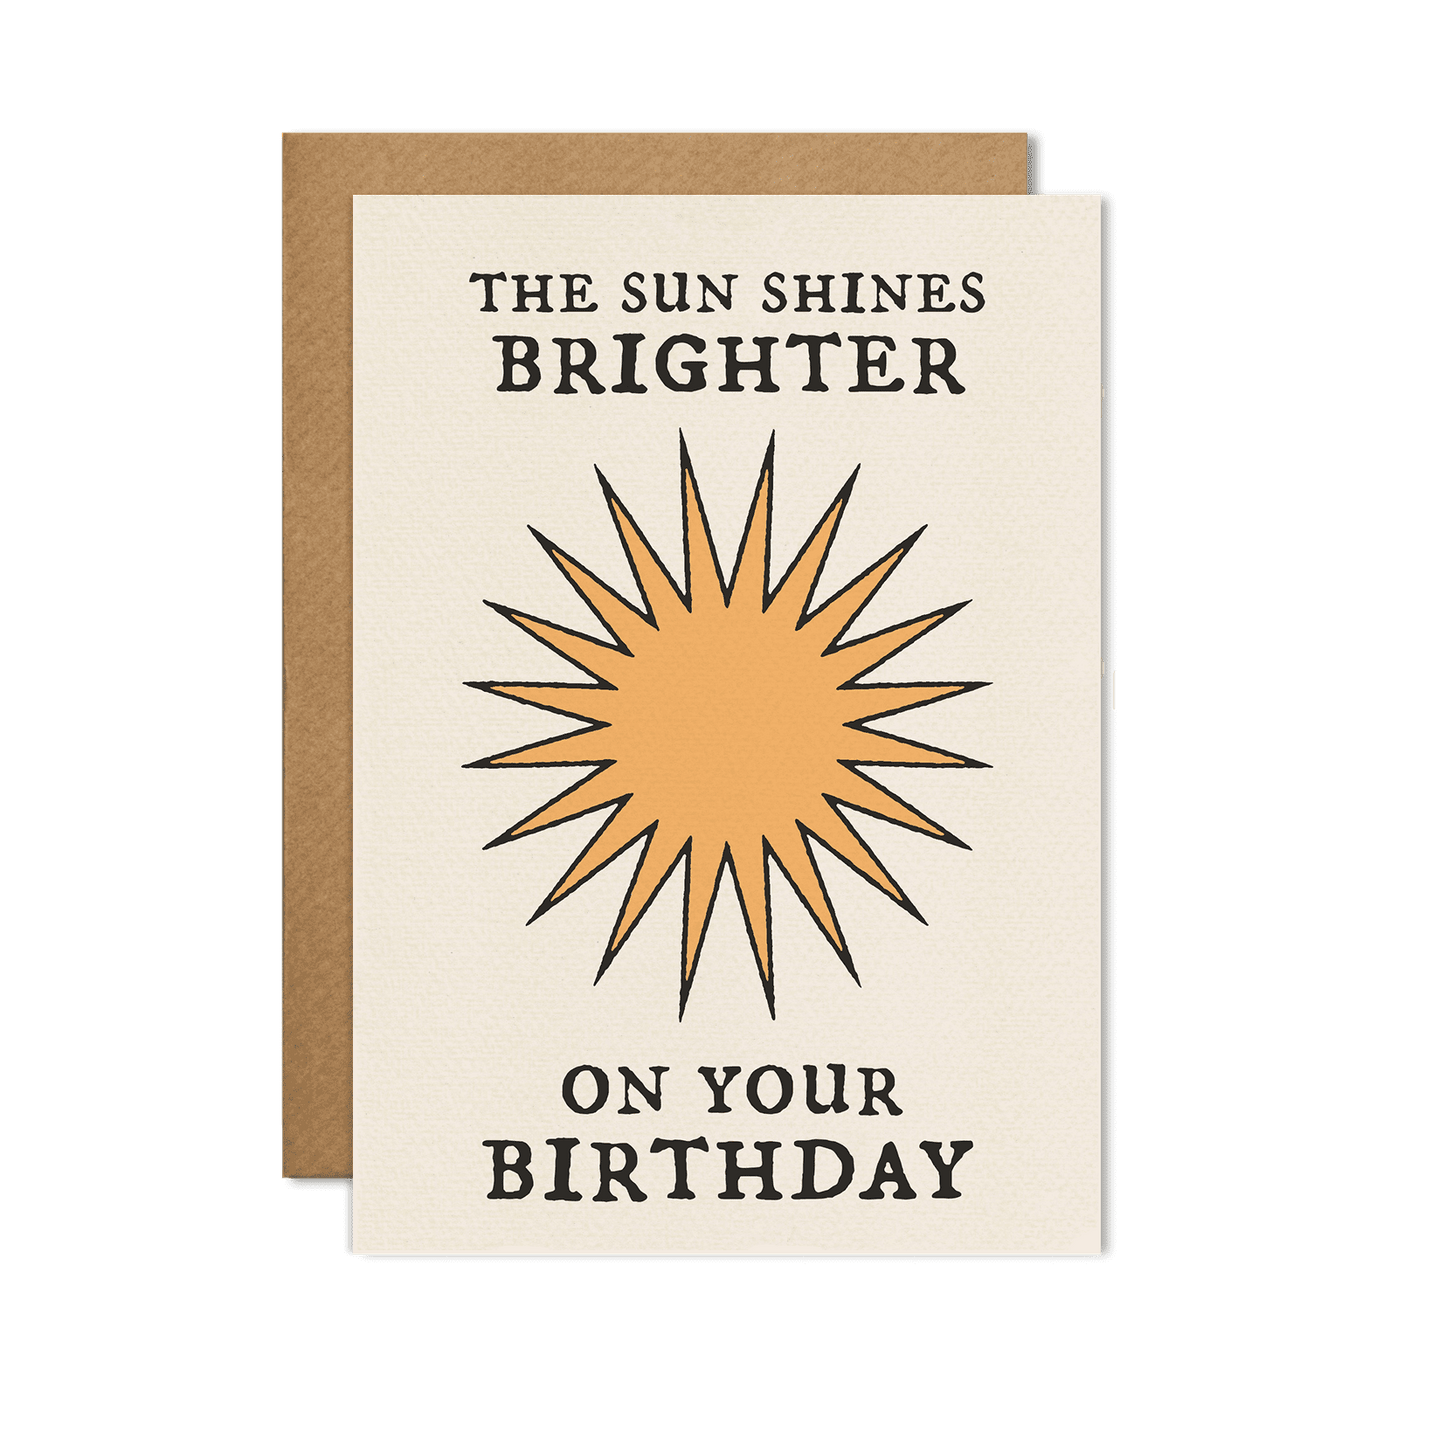 The Sun Shines Brighter Card